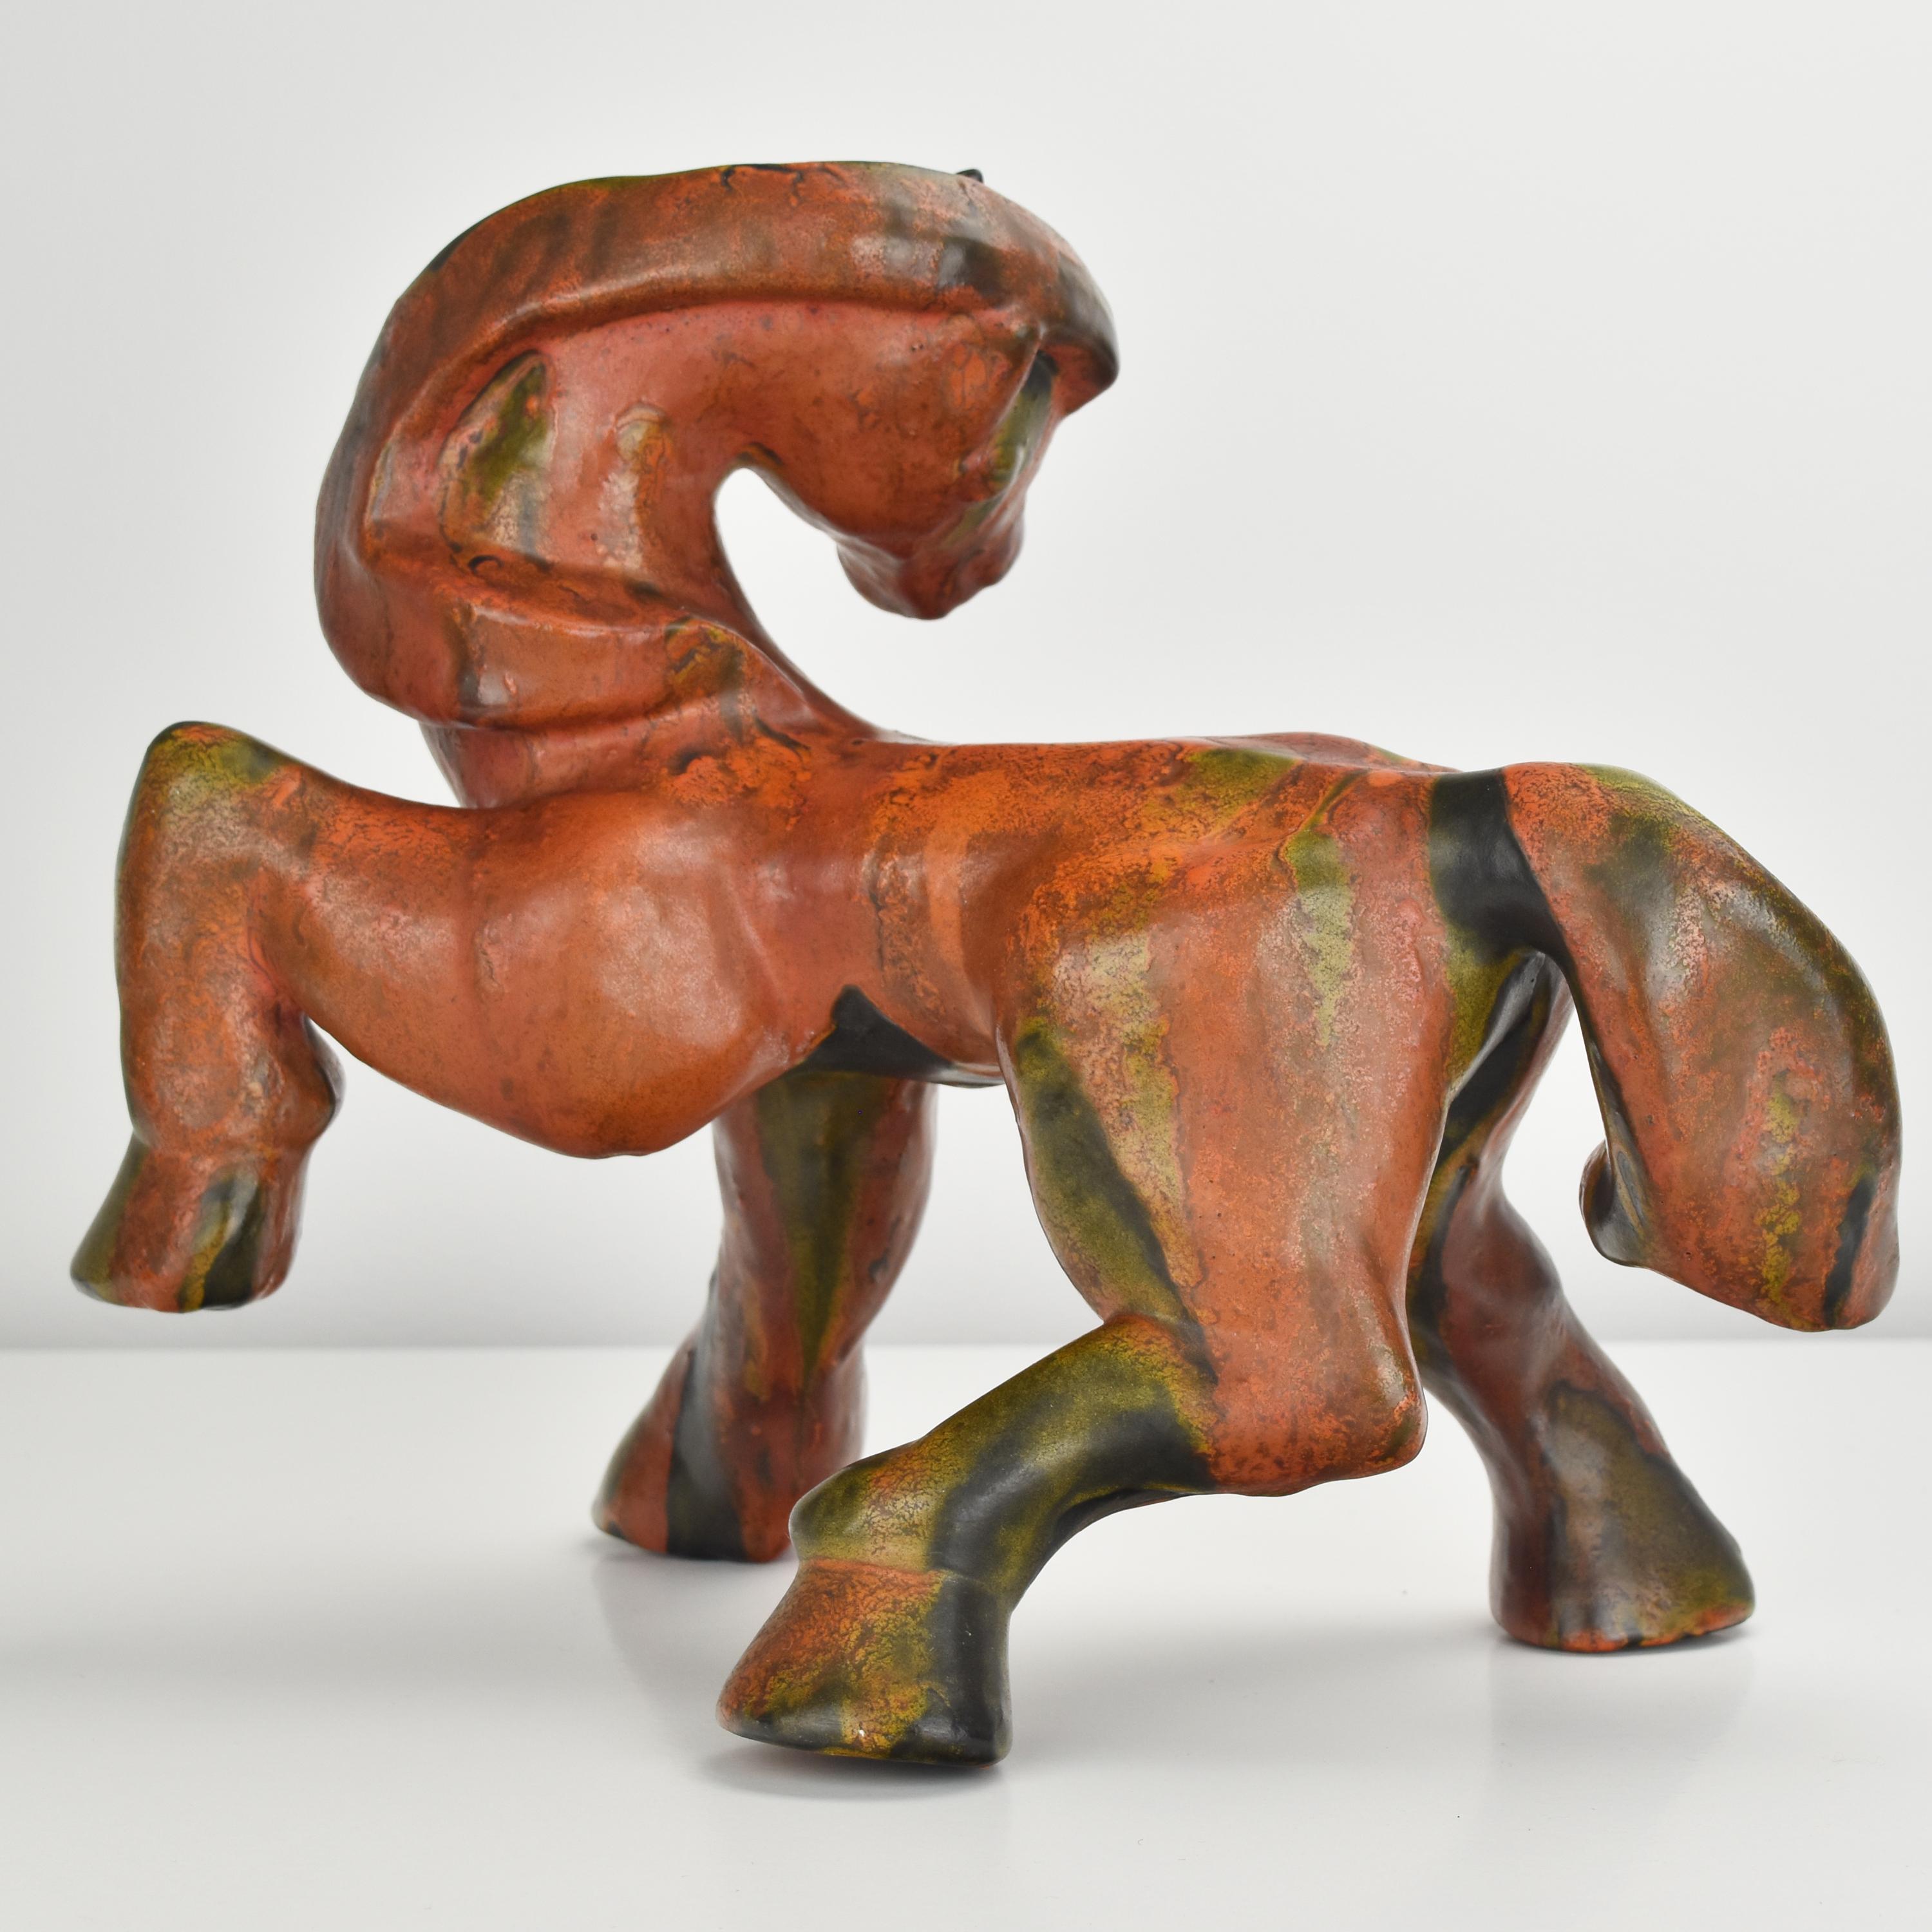 German Art Deco Pottery Ceramic Horse Sculpture Figurine After Franz Marc For Sale 1